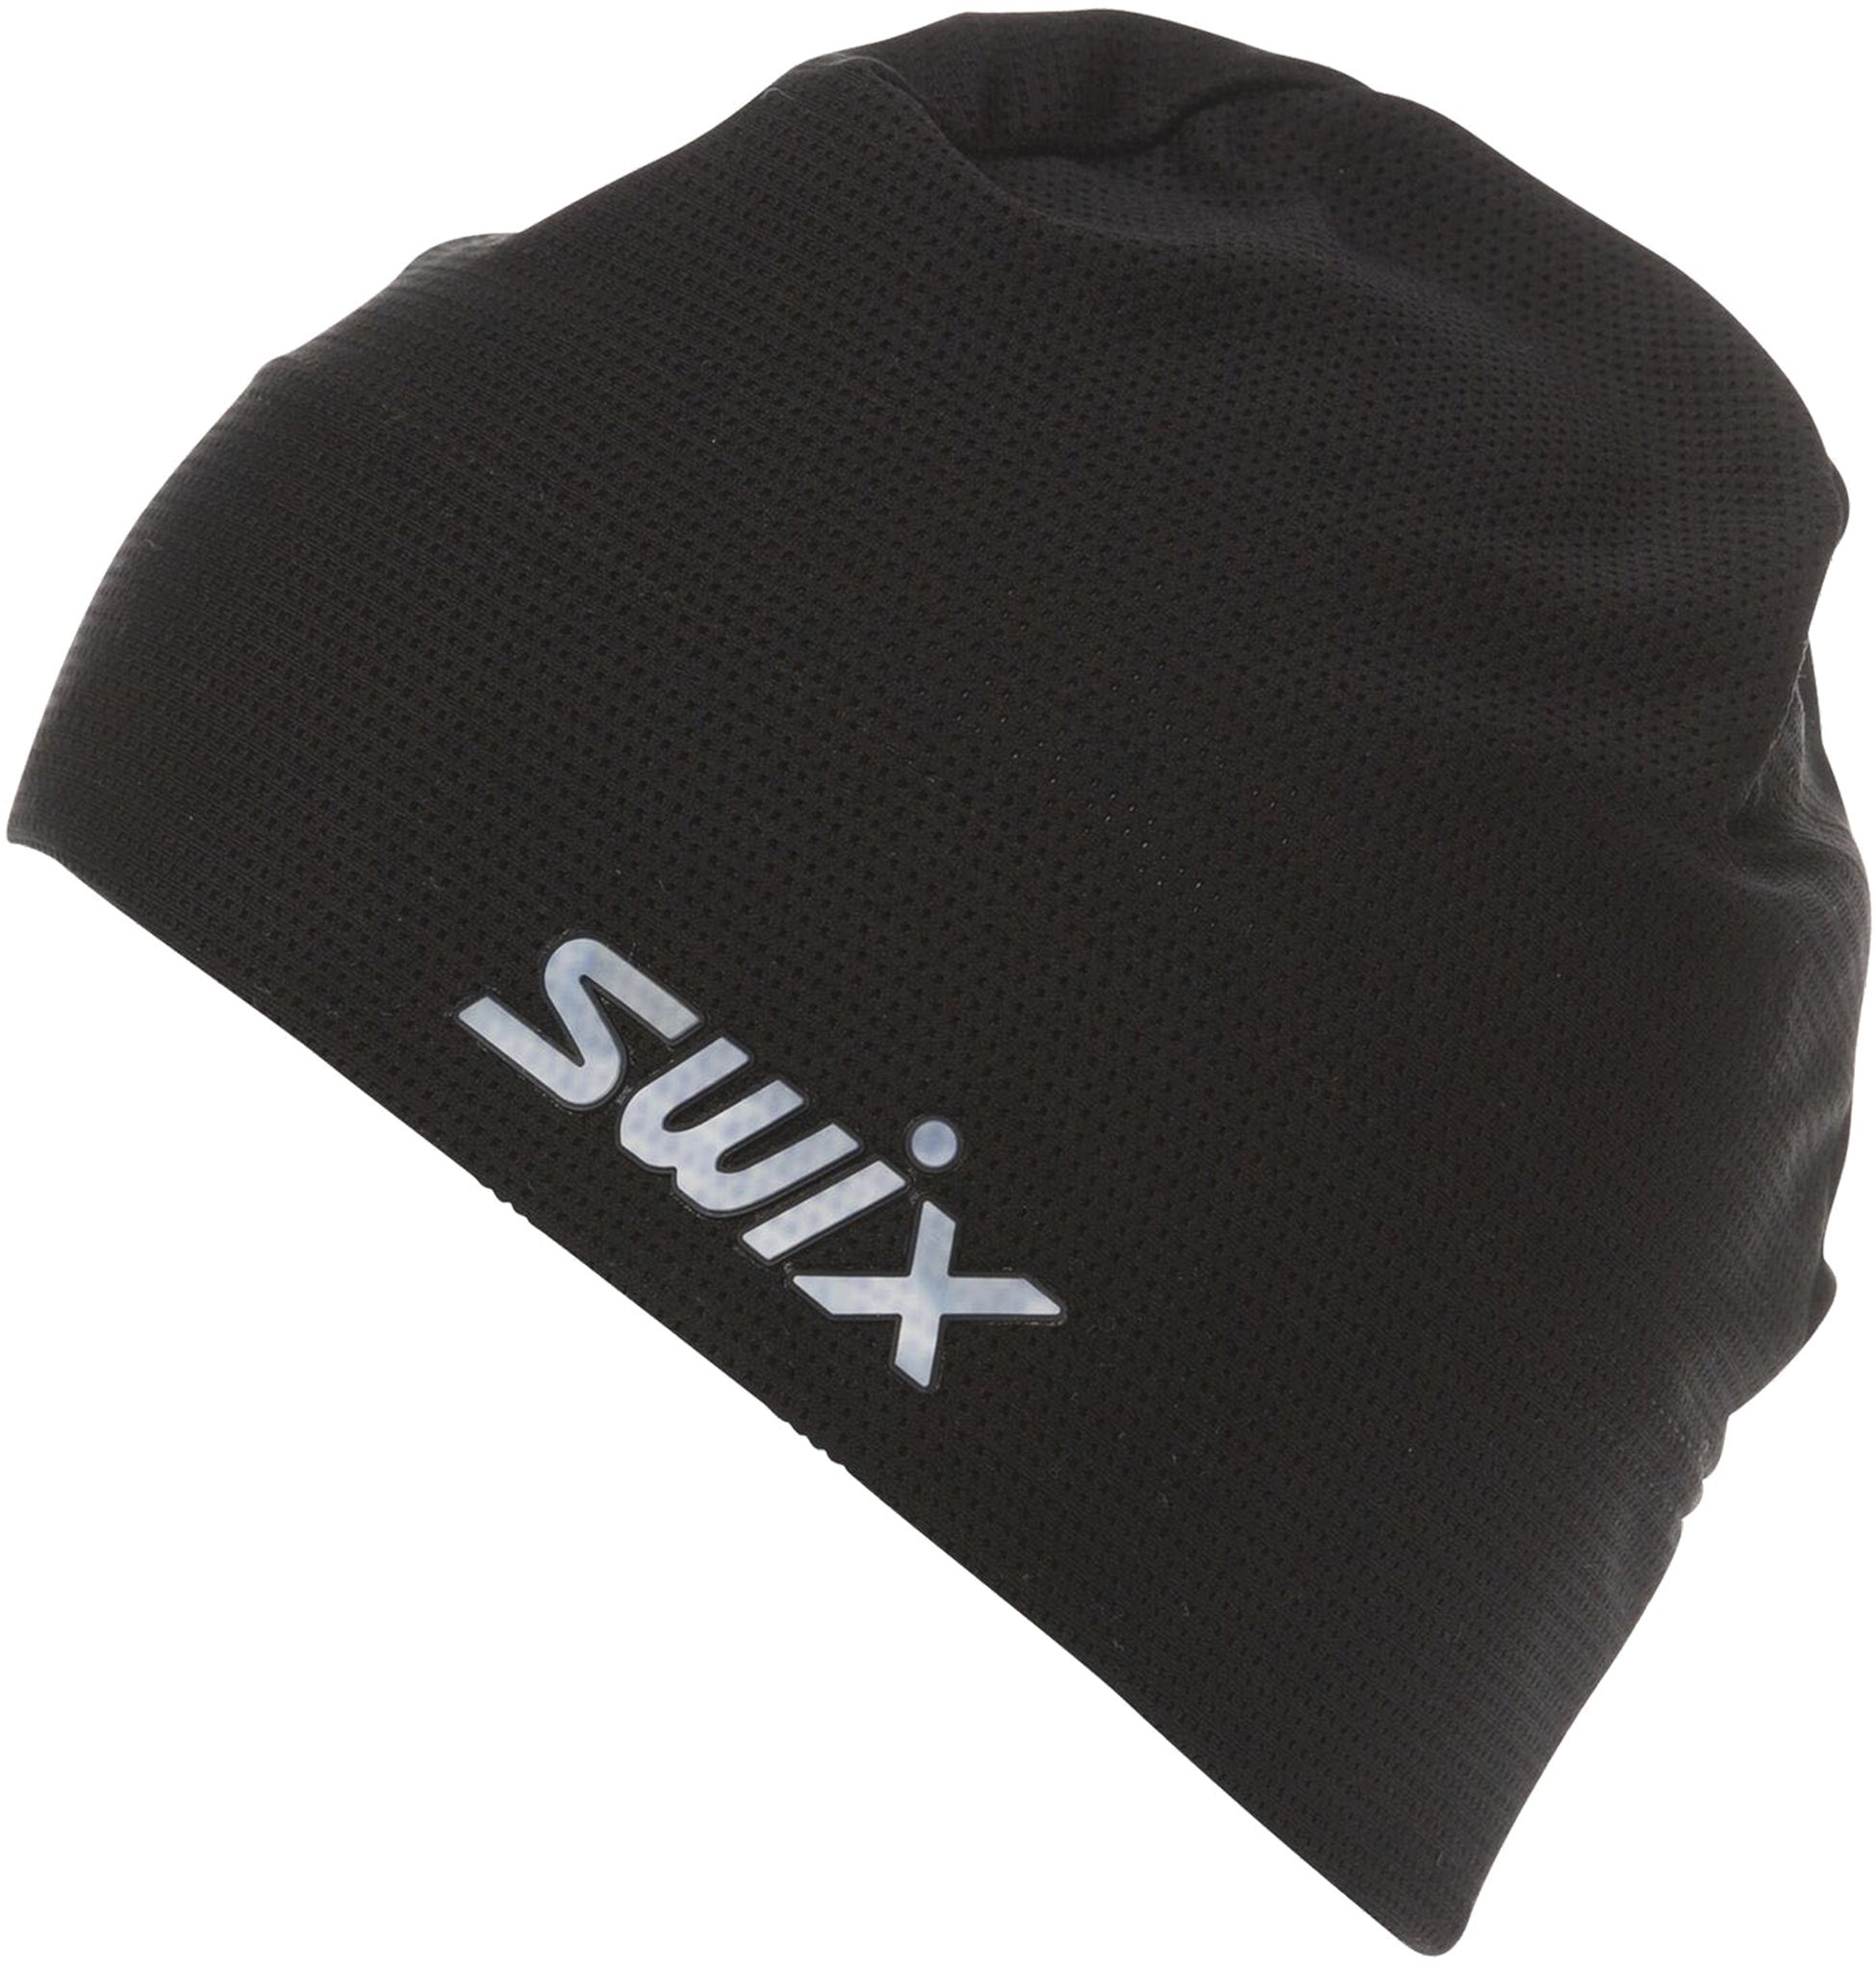 SWIX, Race ultra light hat